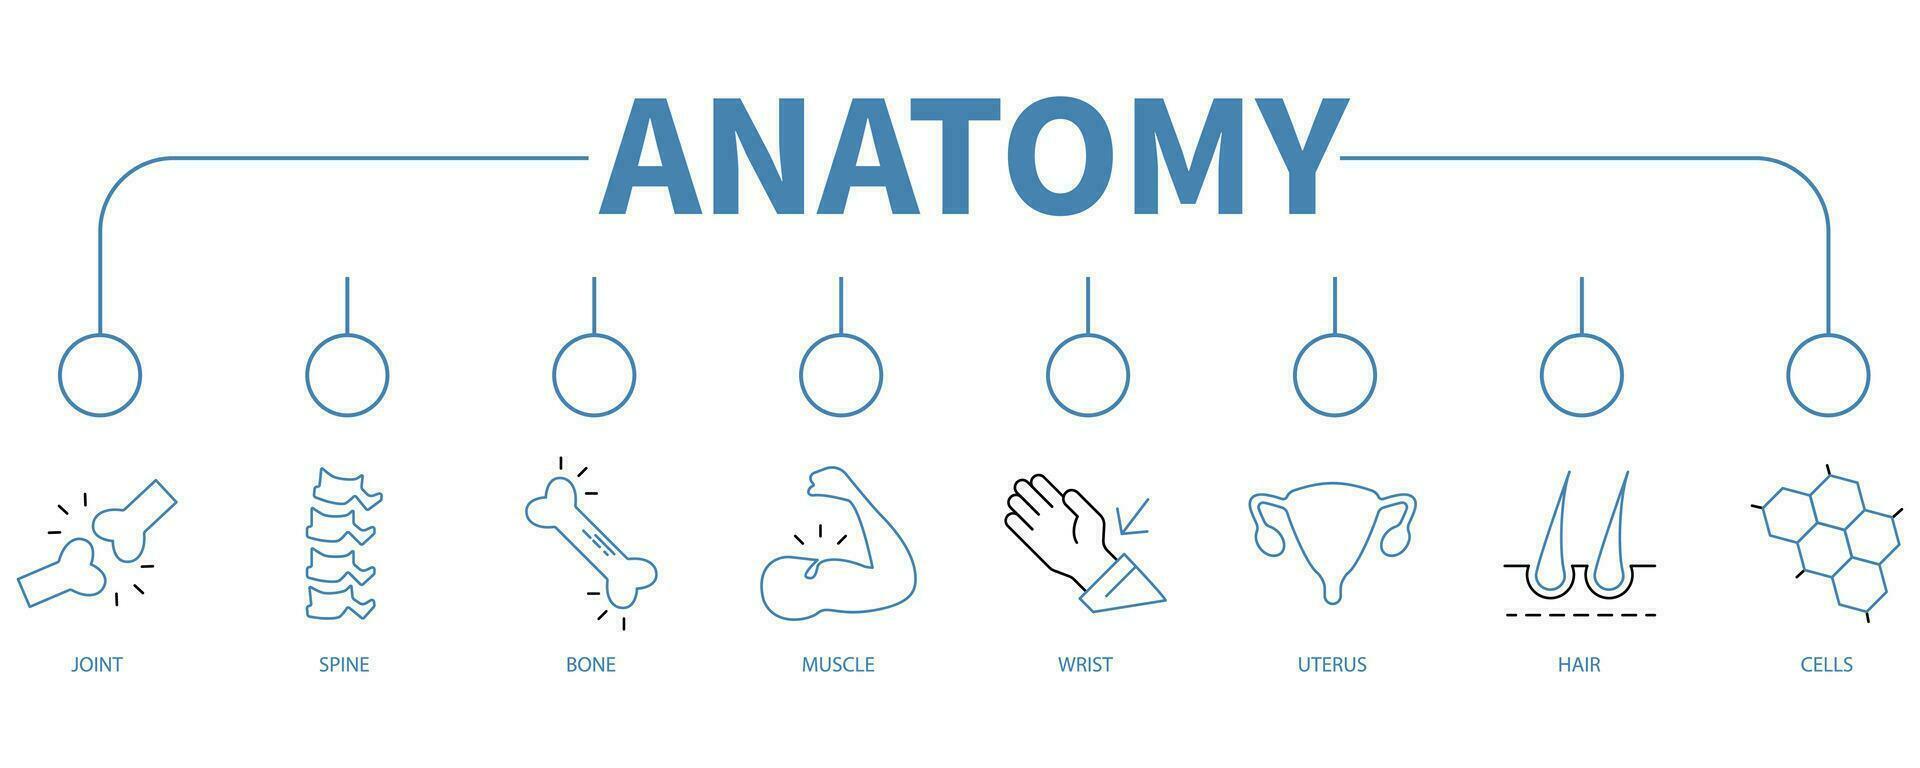 anatomie banier web icoon vector illustratie concept